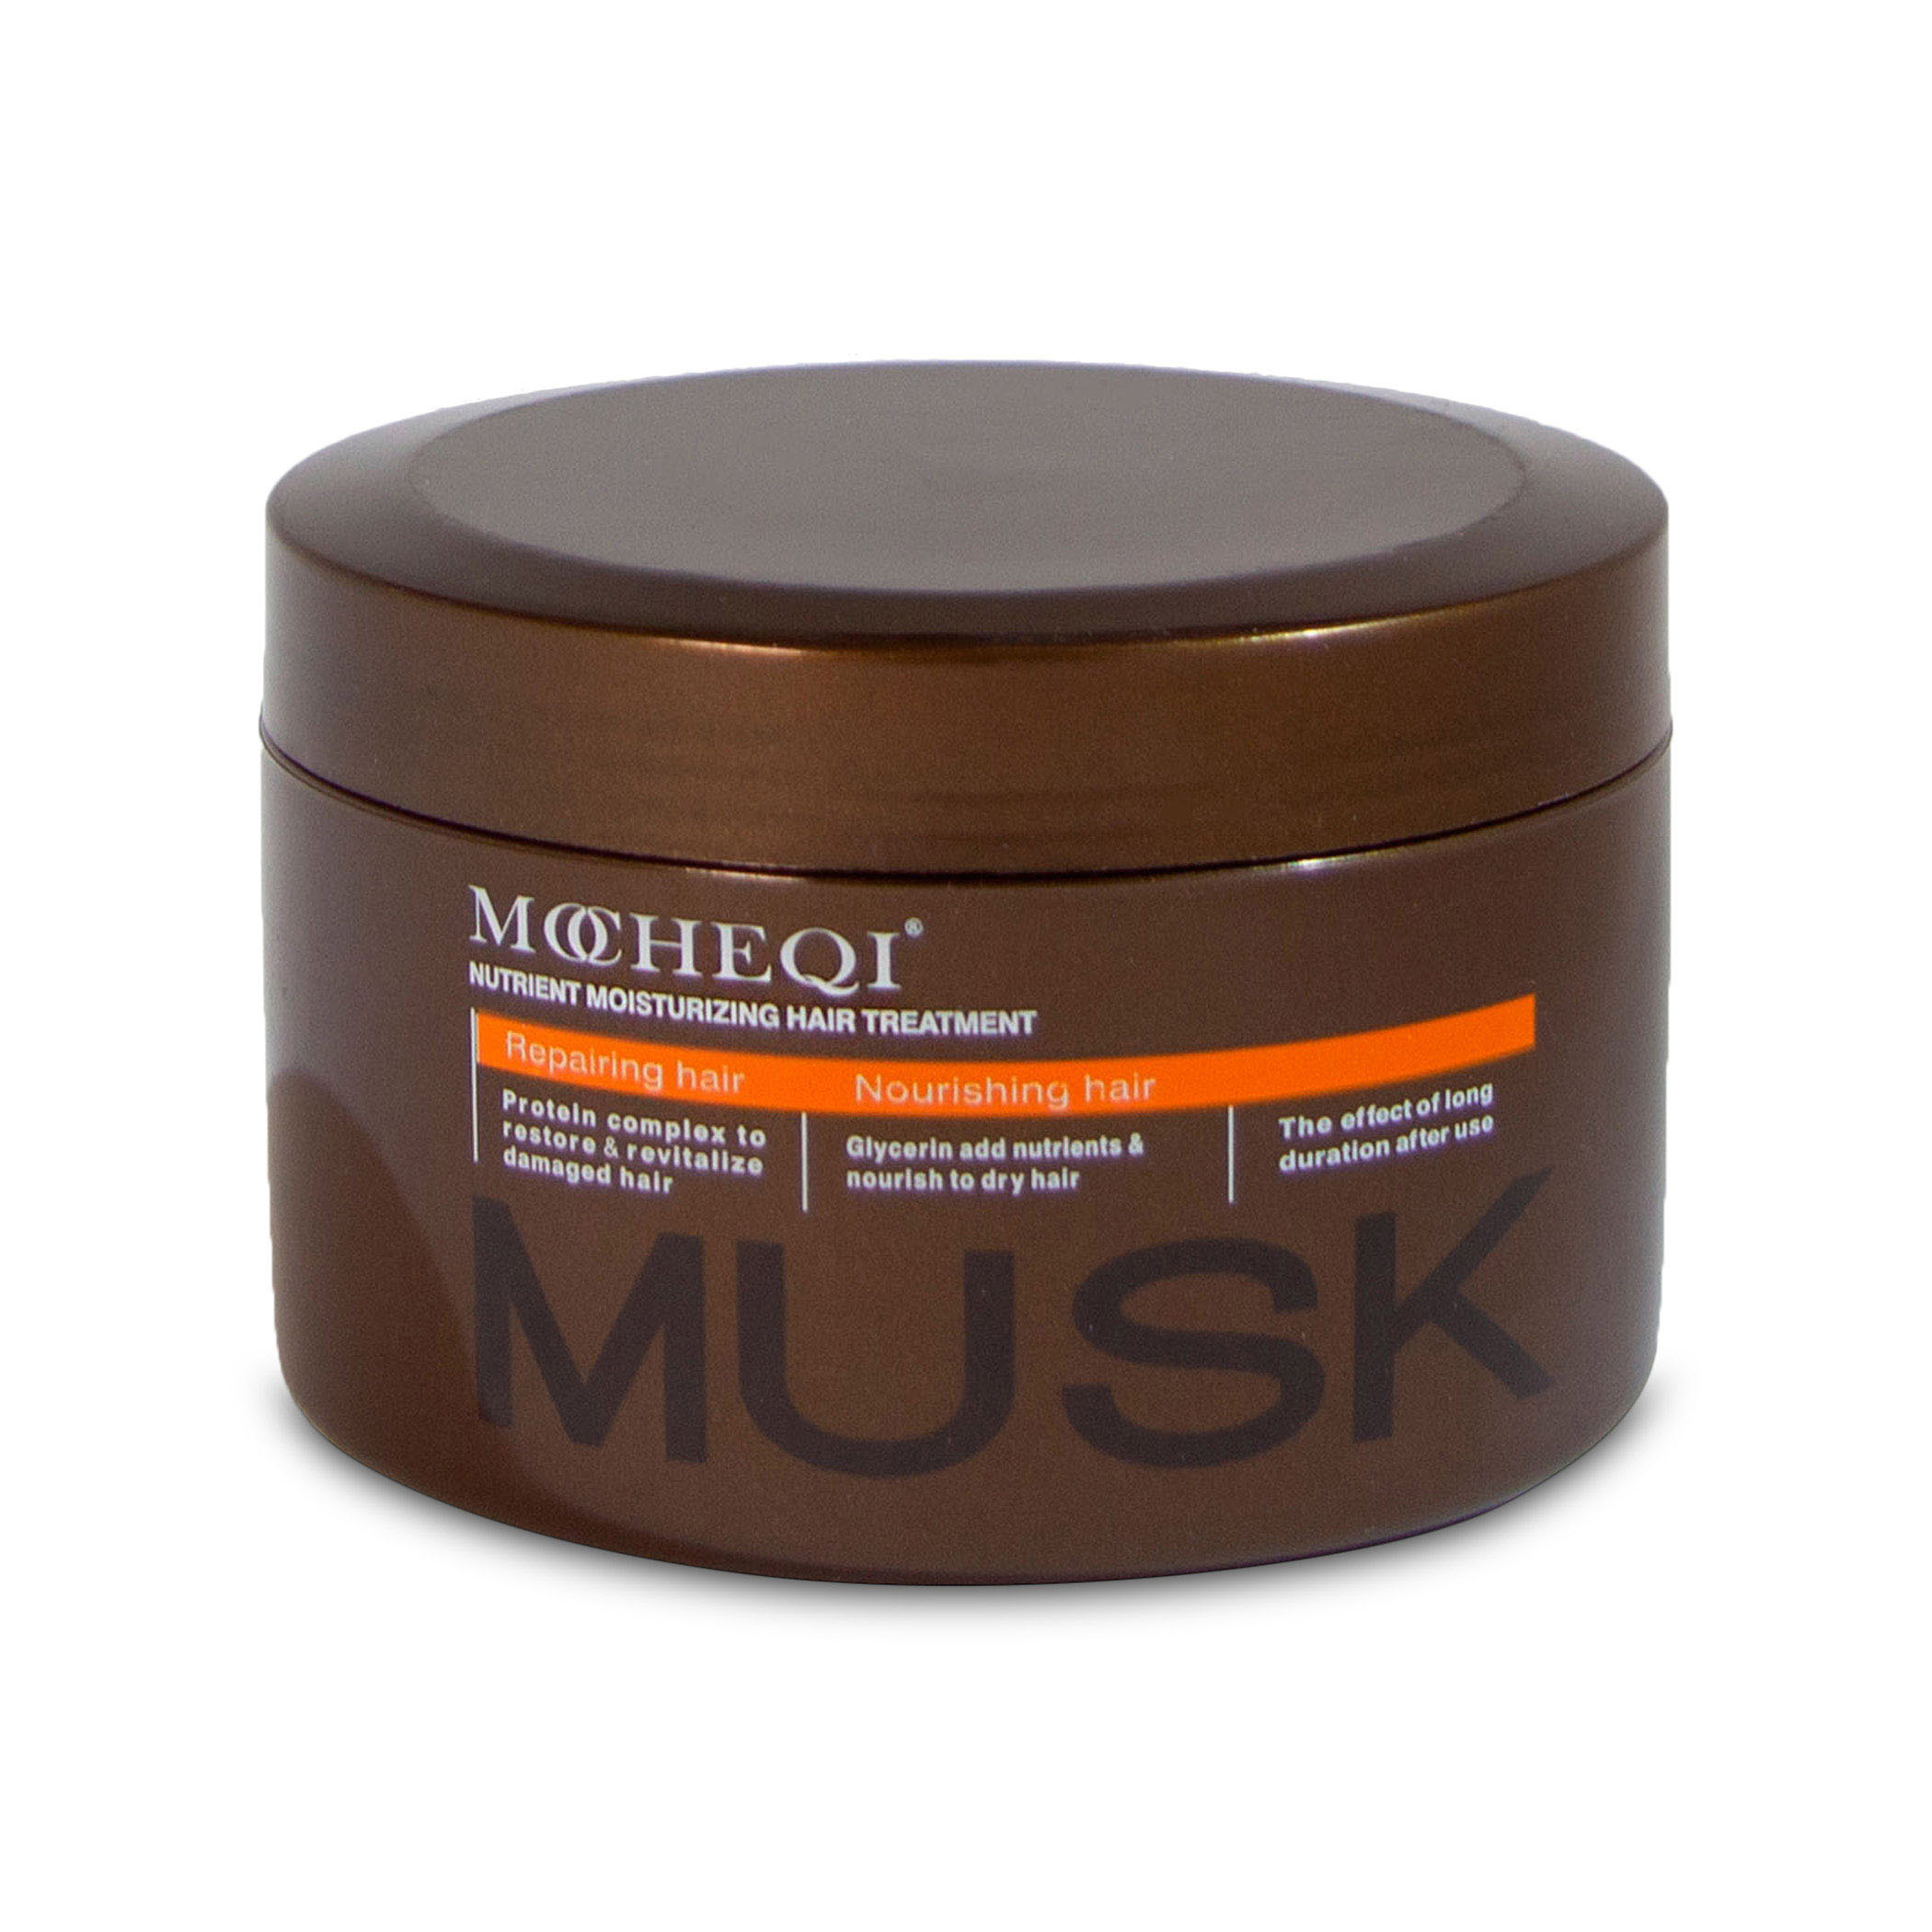 Мачеки купить. Mocheqi Musk маска для волос. Маска Mocheqi для волос 500мл. Mocheqi Musk,nutrient Moisturizing hair treatment, 500 мл. Протеиновая маска мачеки.